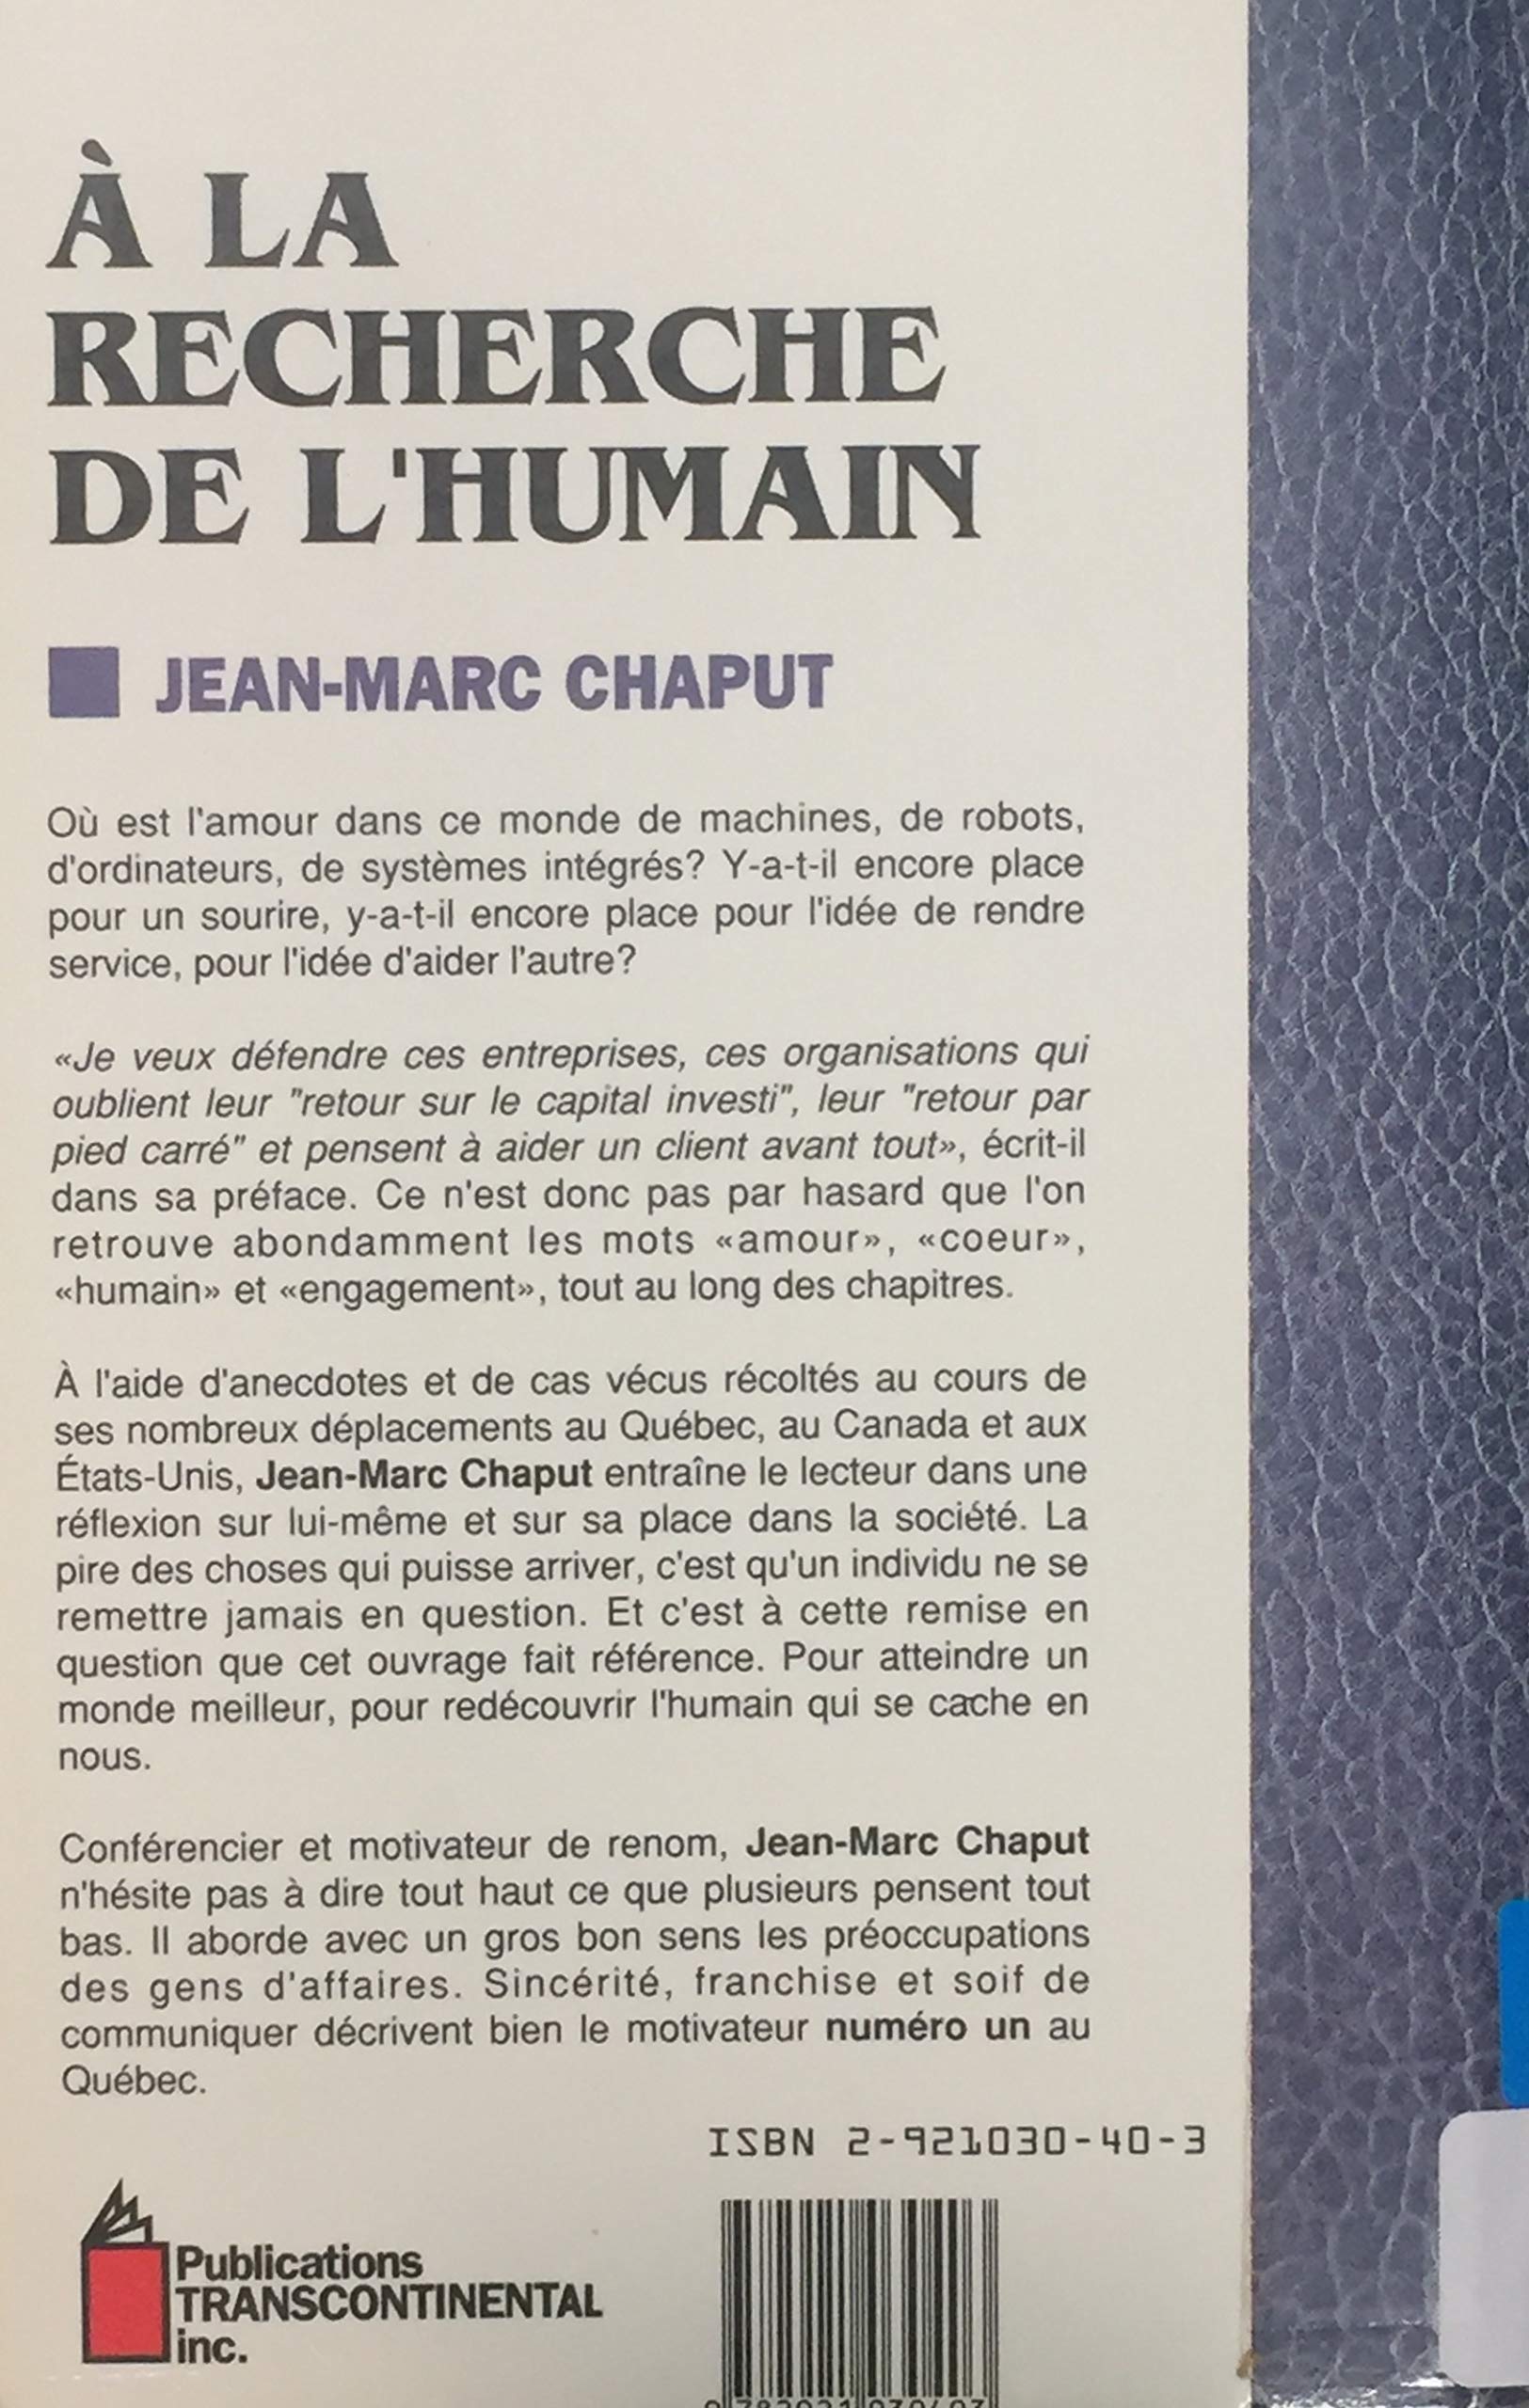 À la recherche de l'humain (Jean-Marc Chaput)